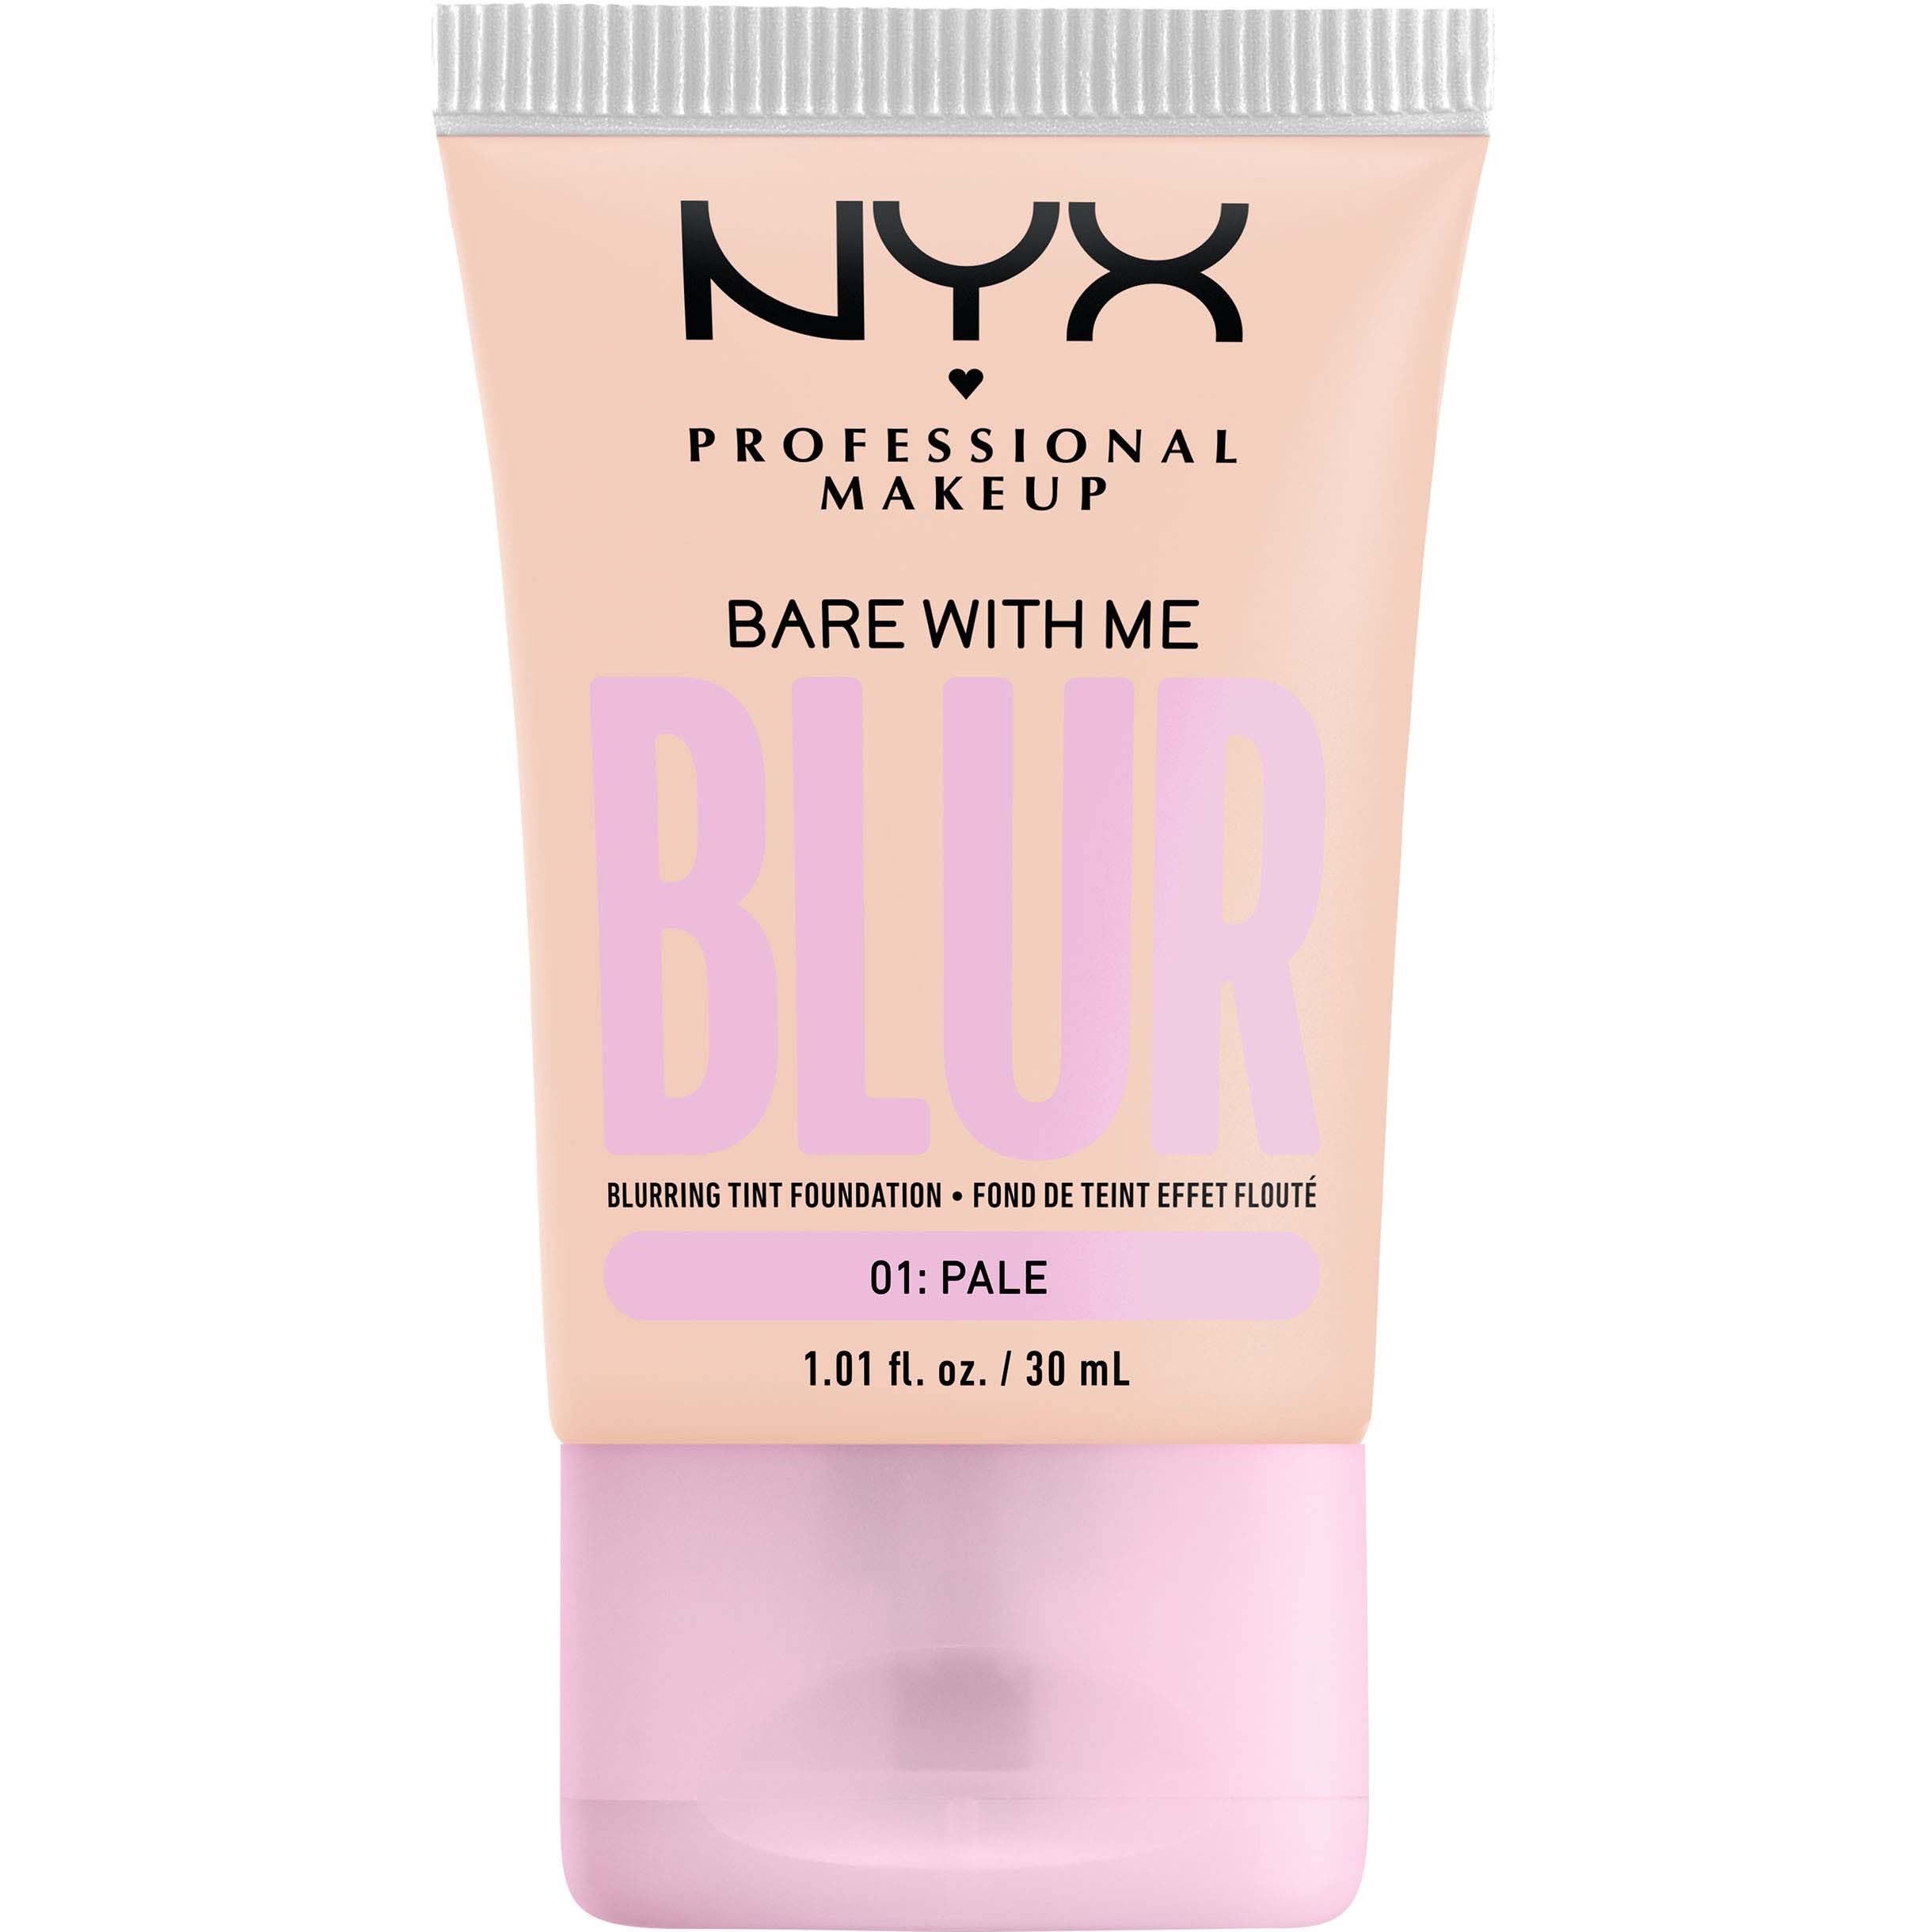 Bilde av Nyx Professional Makeup Bare With Me Blur Tint Foundation 01 Pale